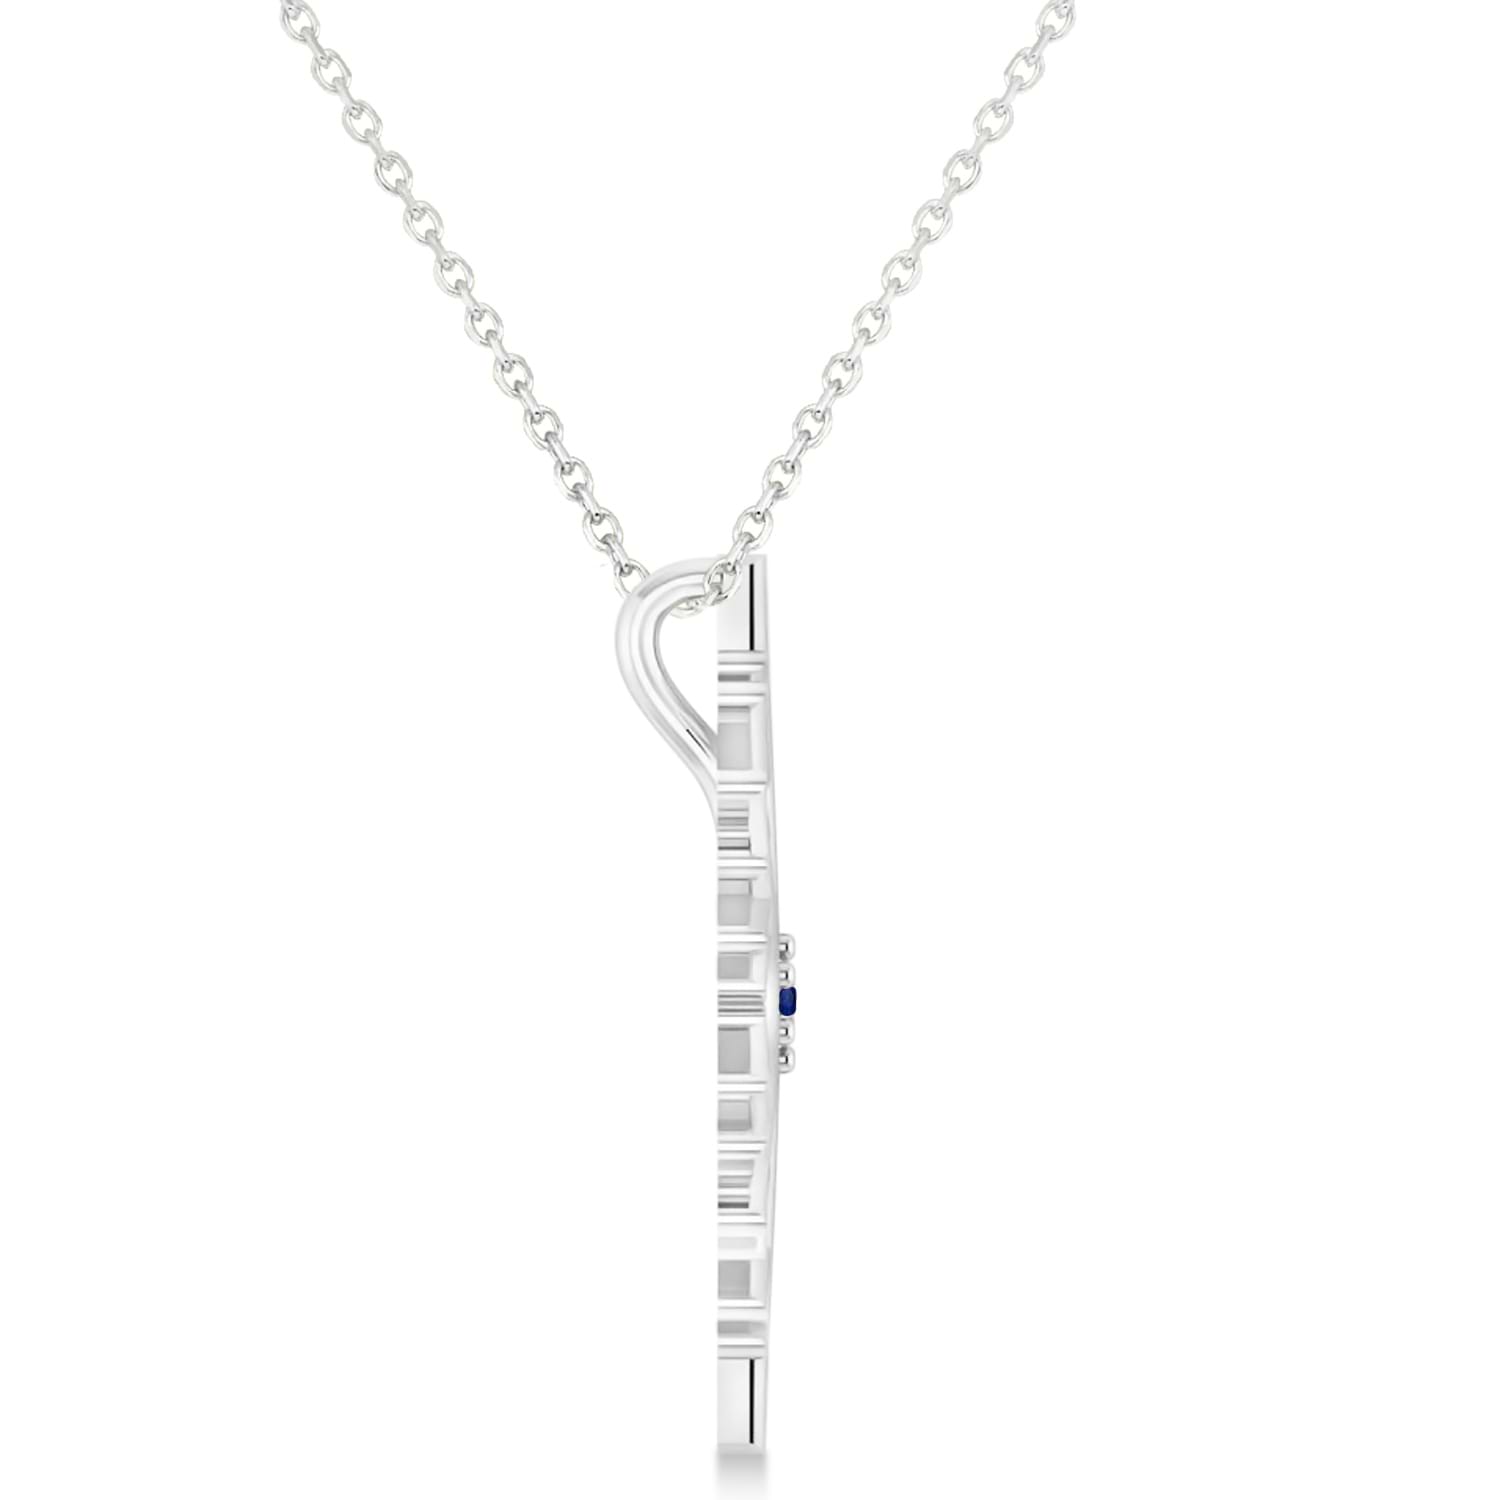 Blue Sapphire Winter Snowflake Pendant Necklace 14k White Gold (0.04ct)